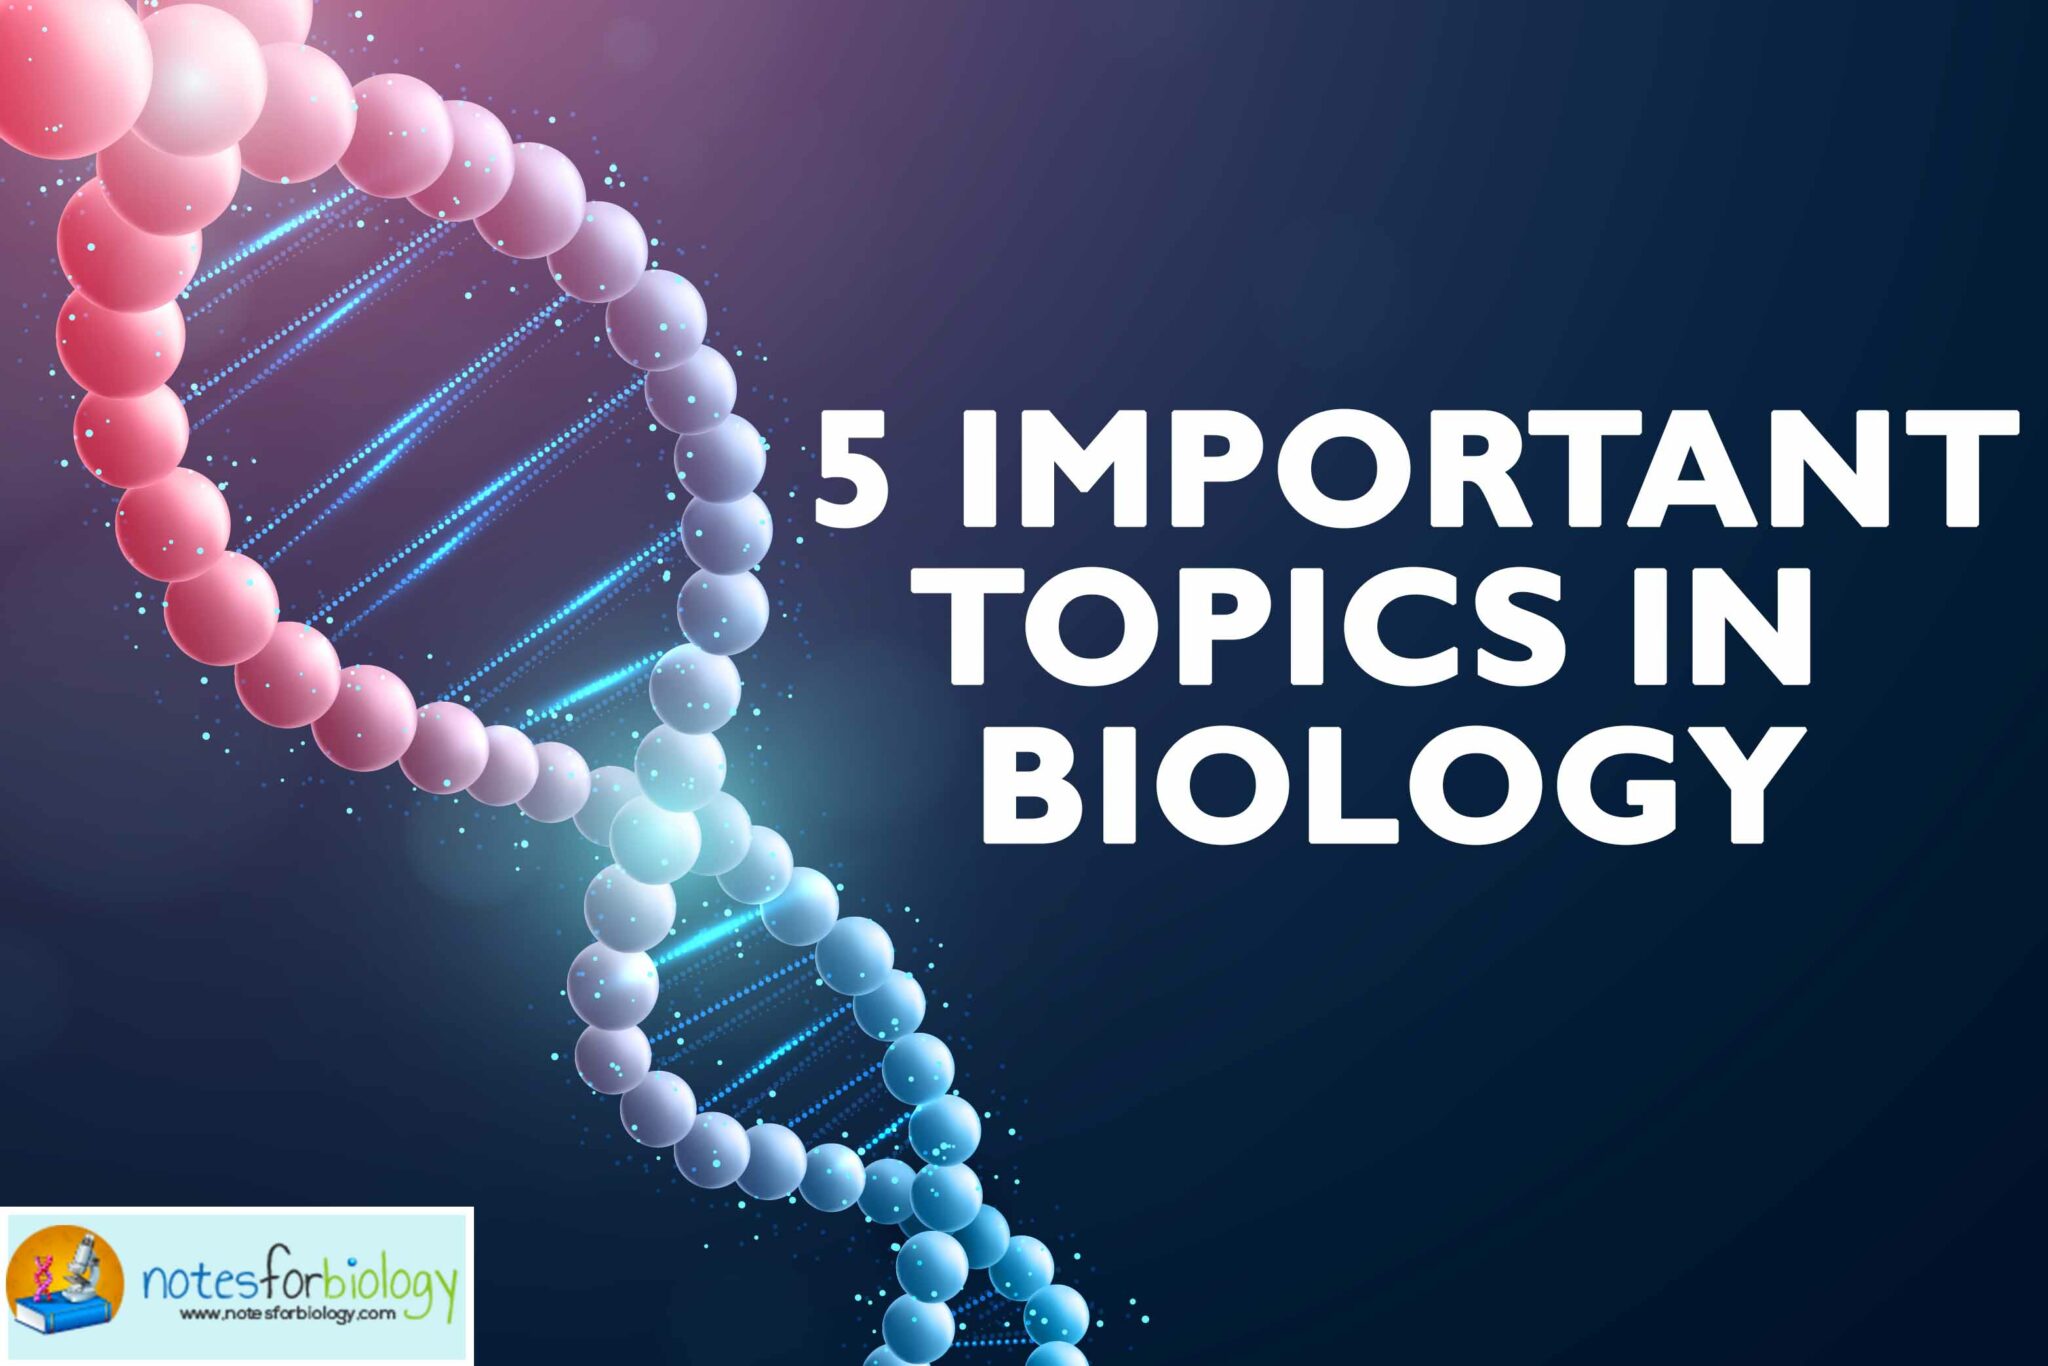 topics for presentation biology